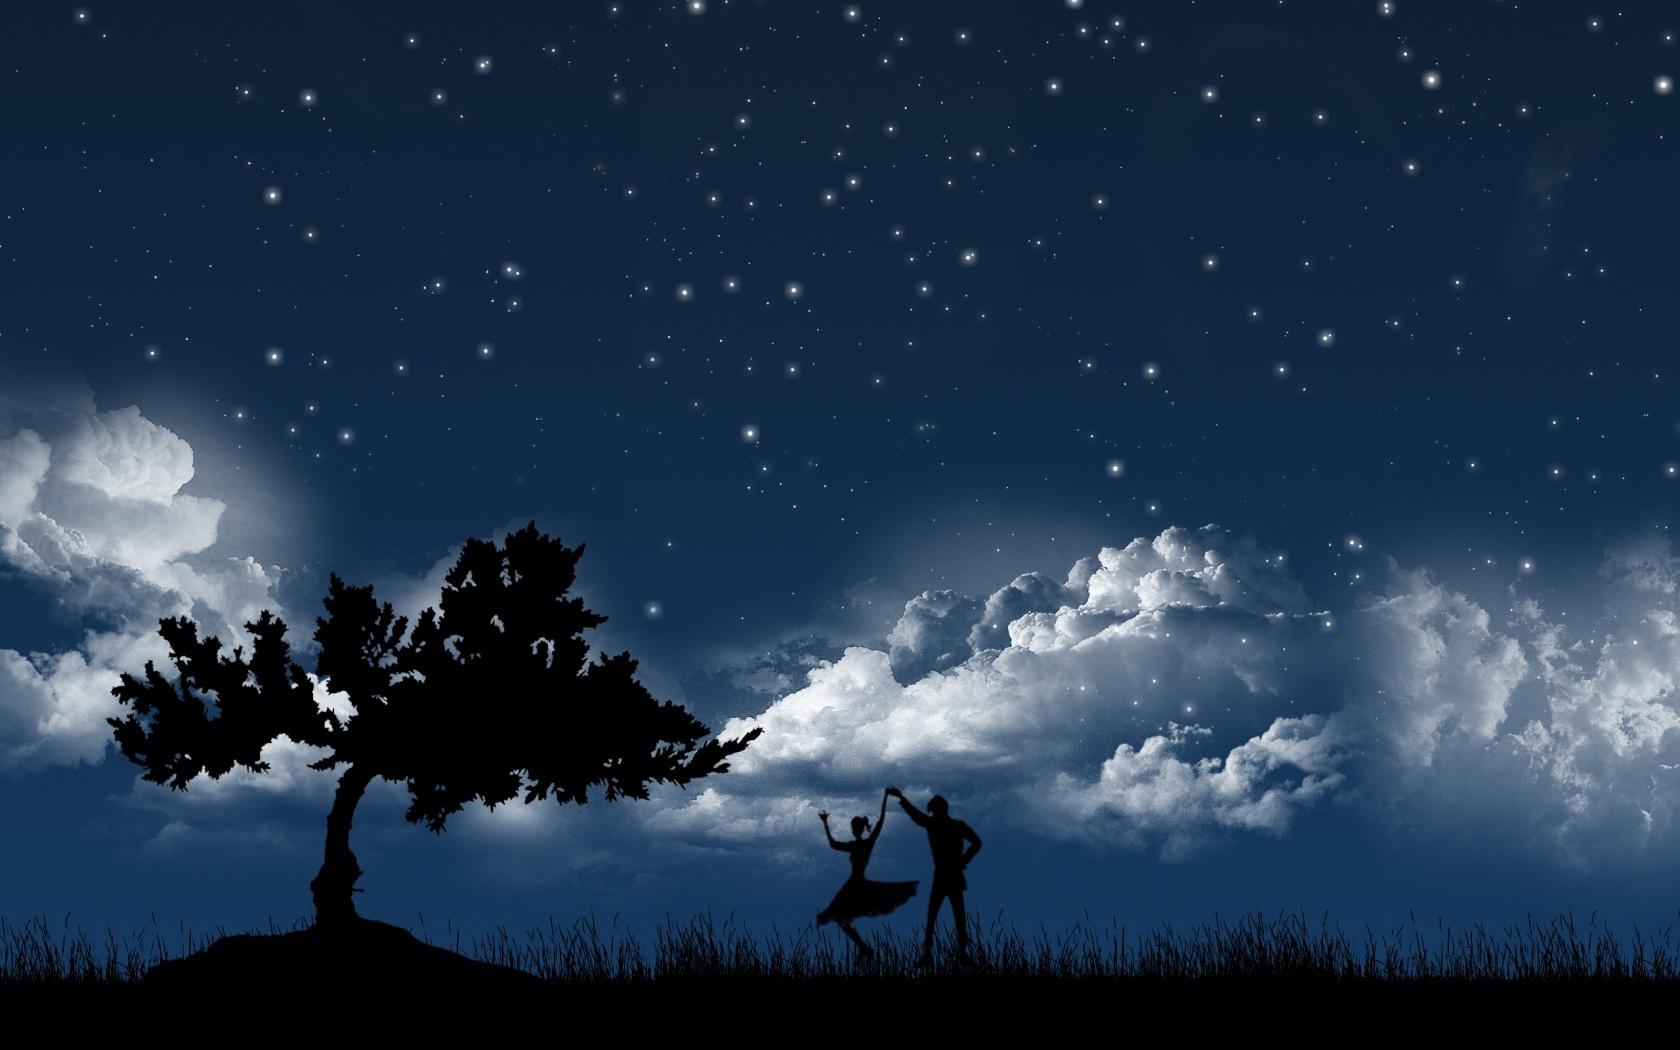 Dancing in Moonlight Wallpaper in jpg format for free download